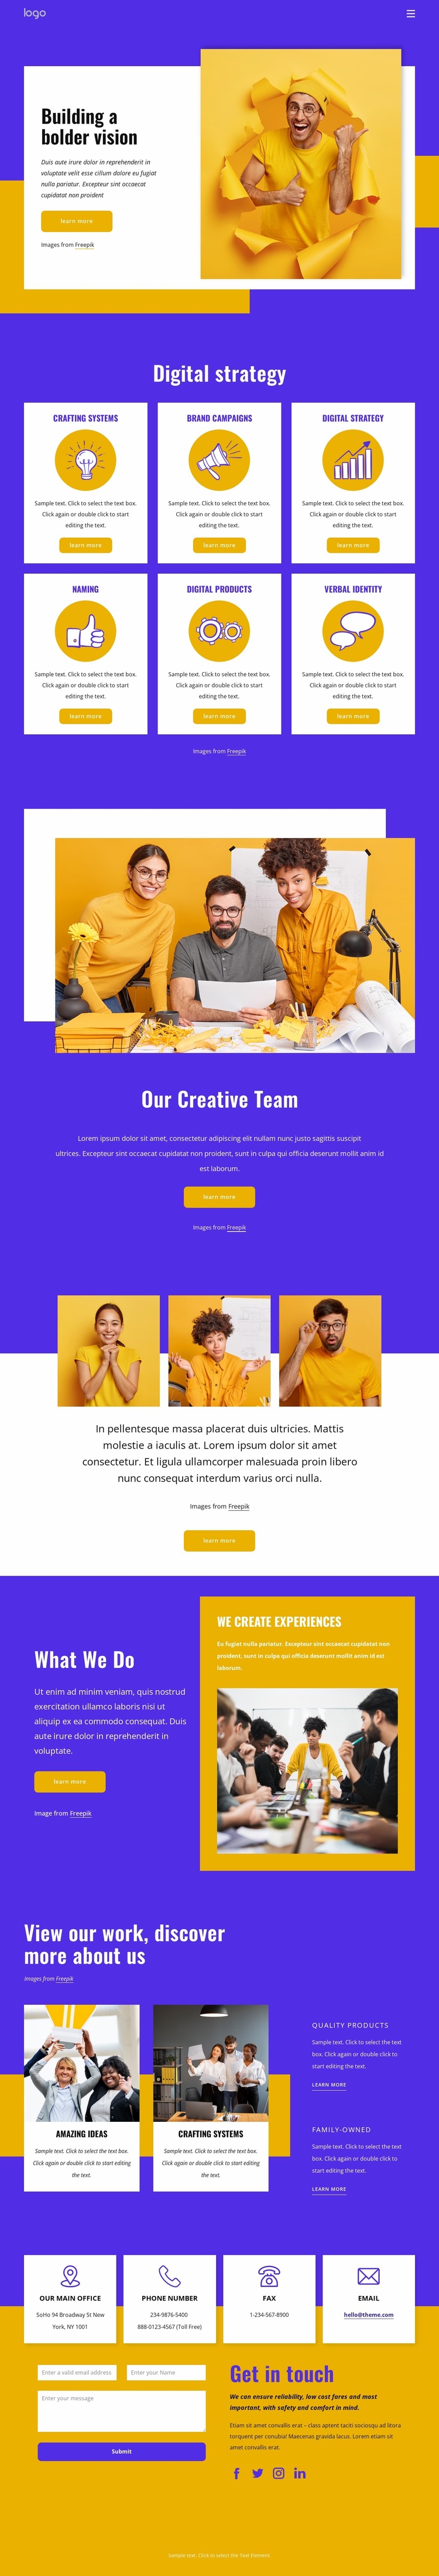 UX design and branding agency Website Template